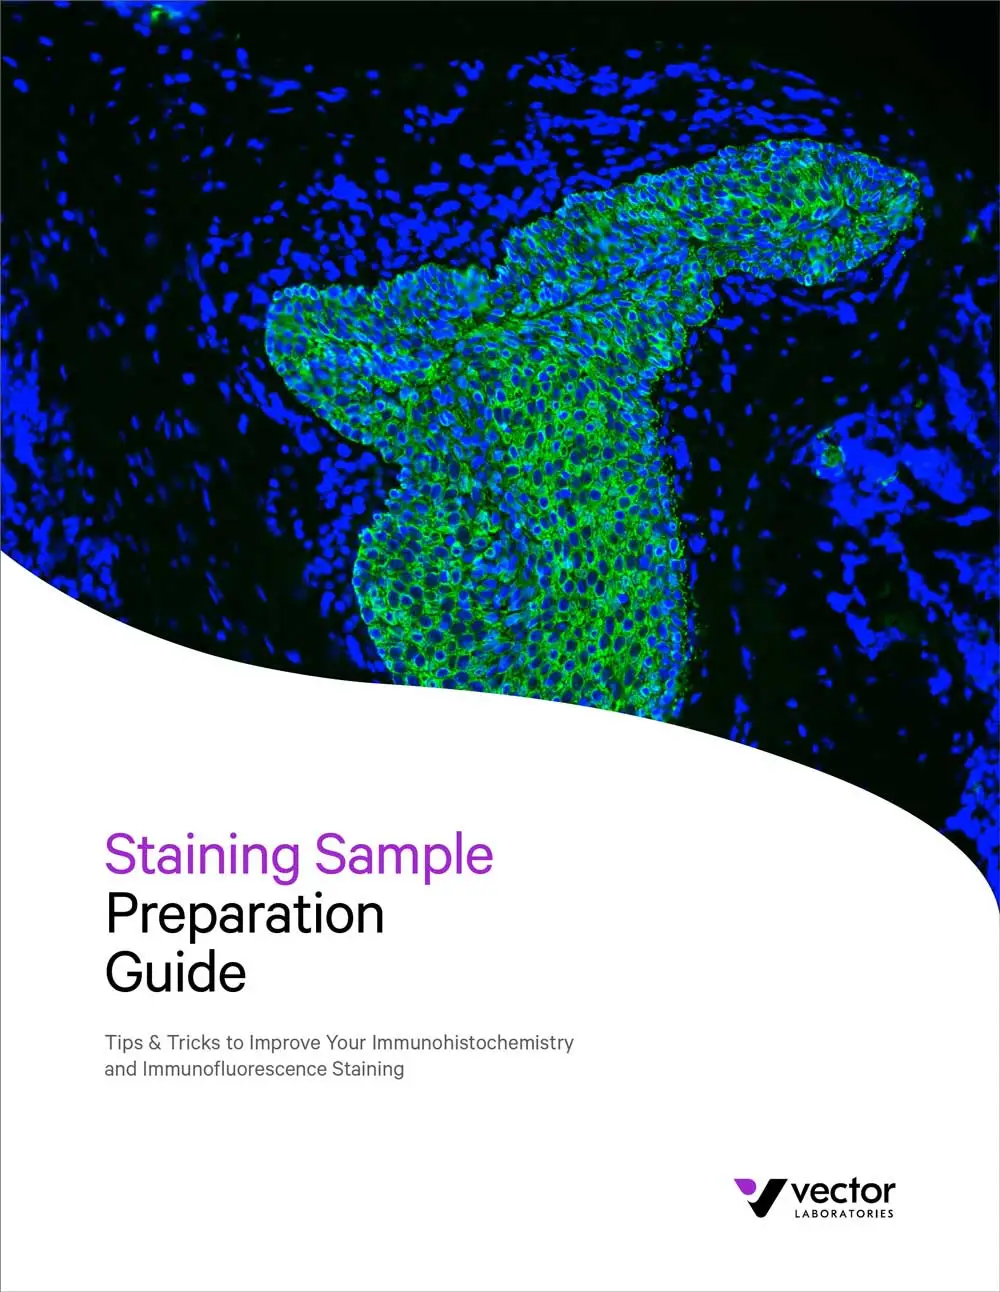 Sample Prep Guide Cover Image 3